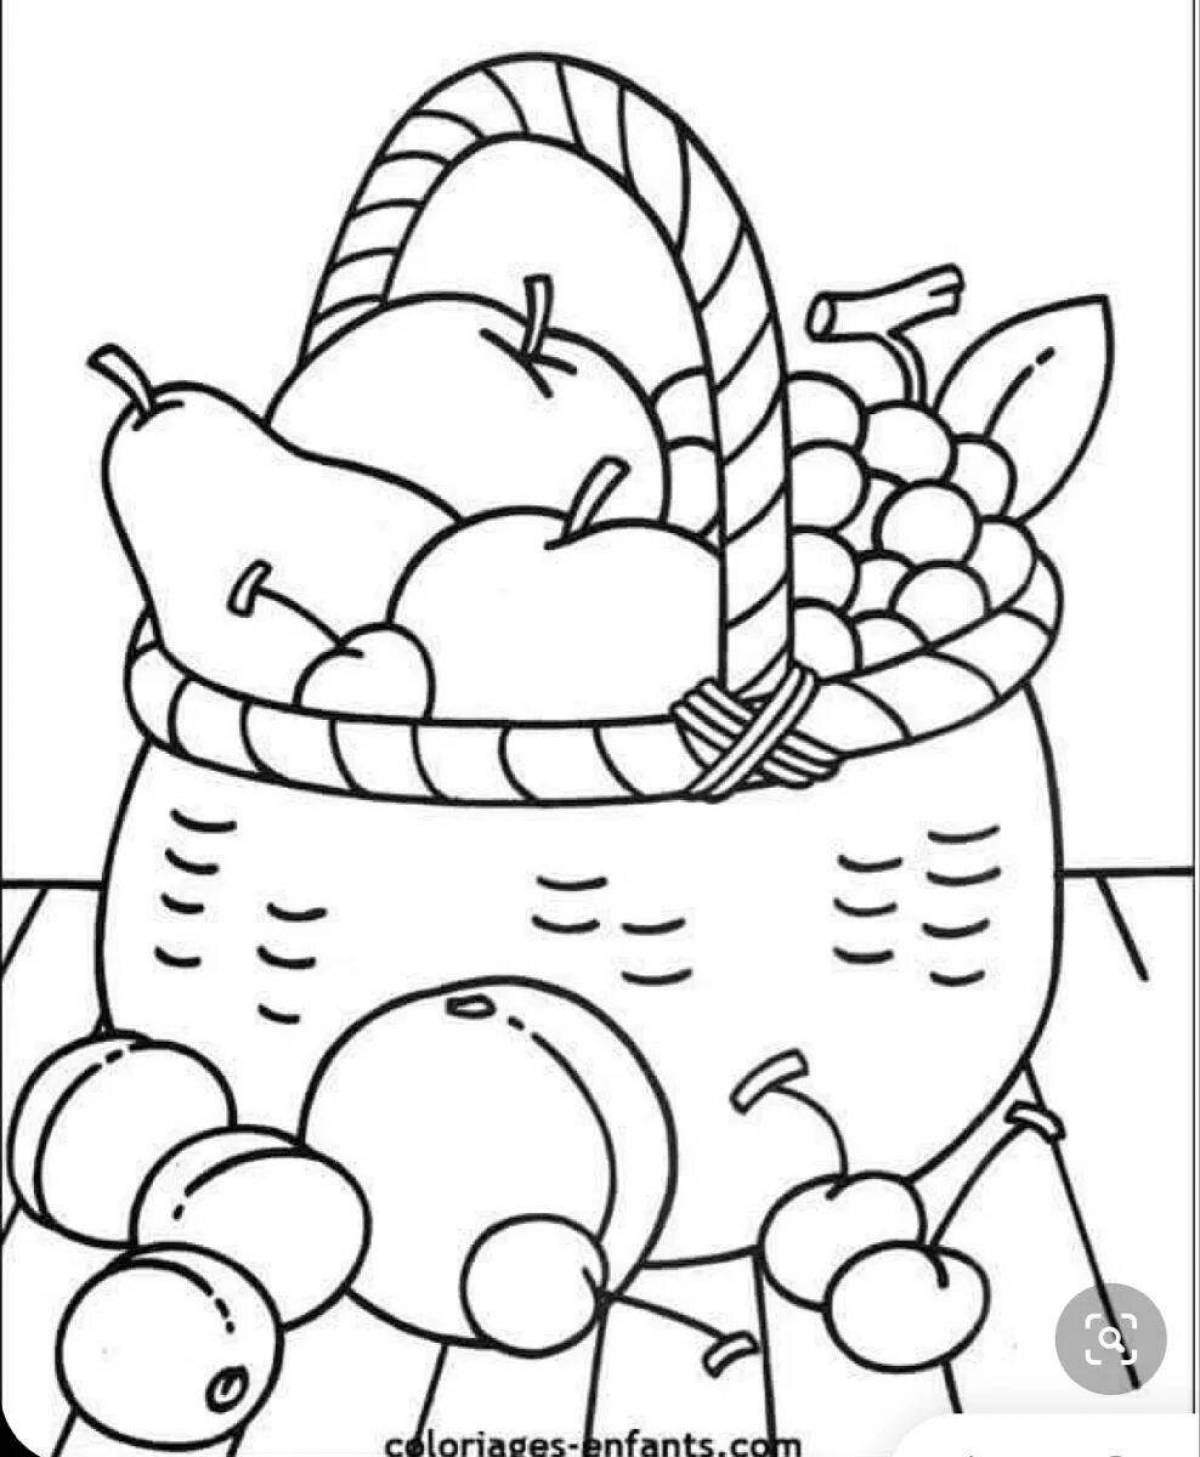 A wonderful fruit basket coloring book for kids